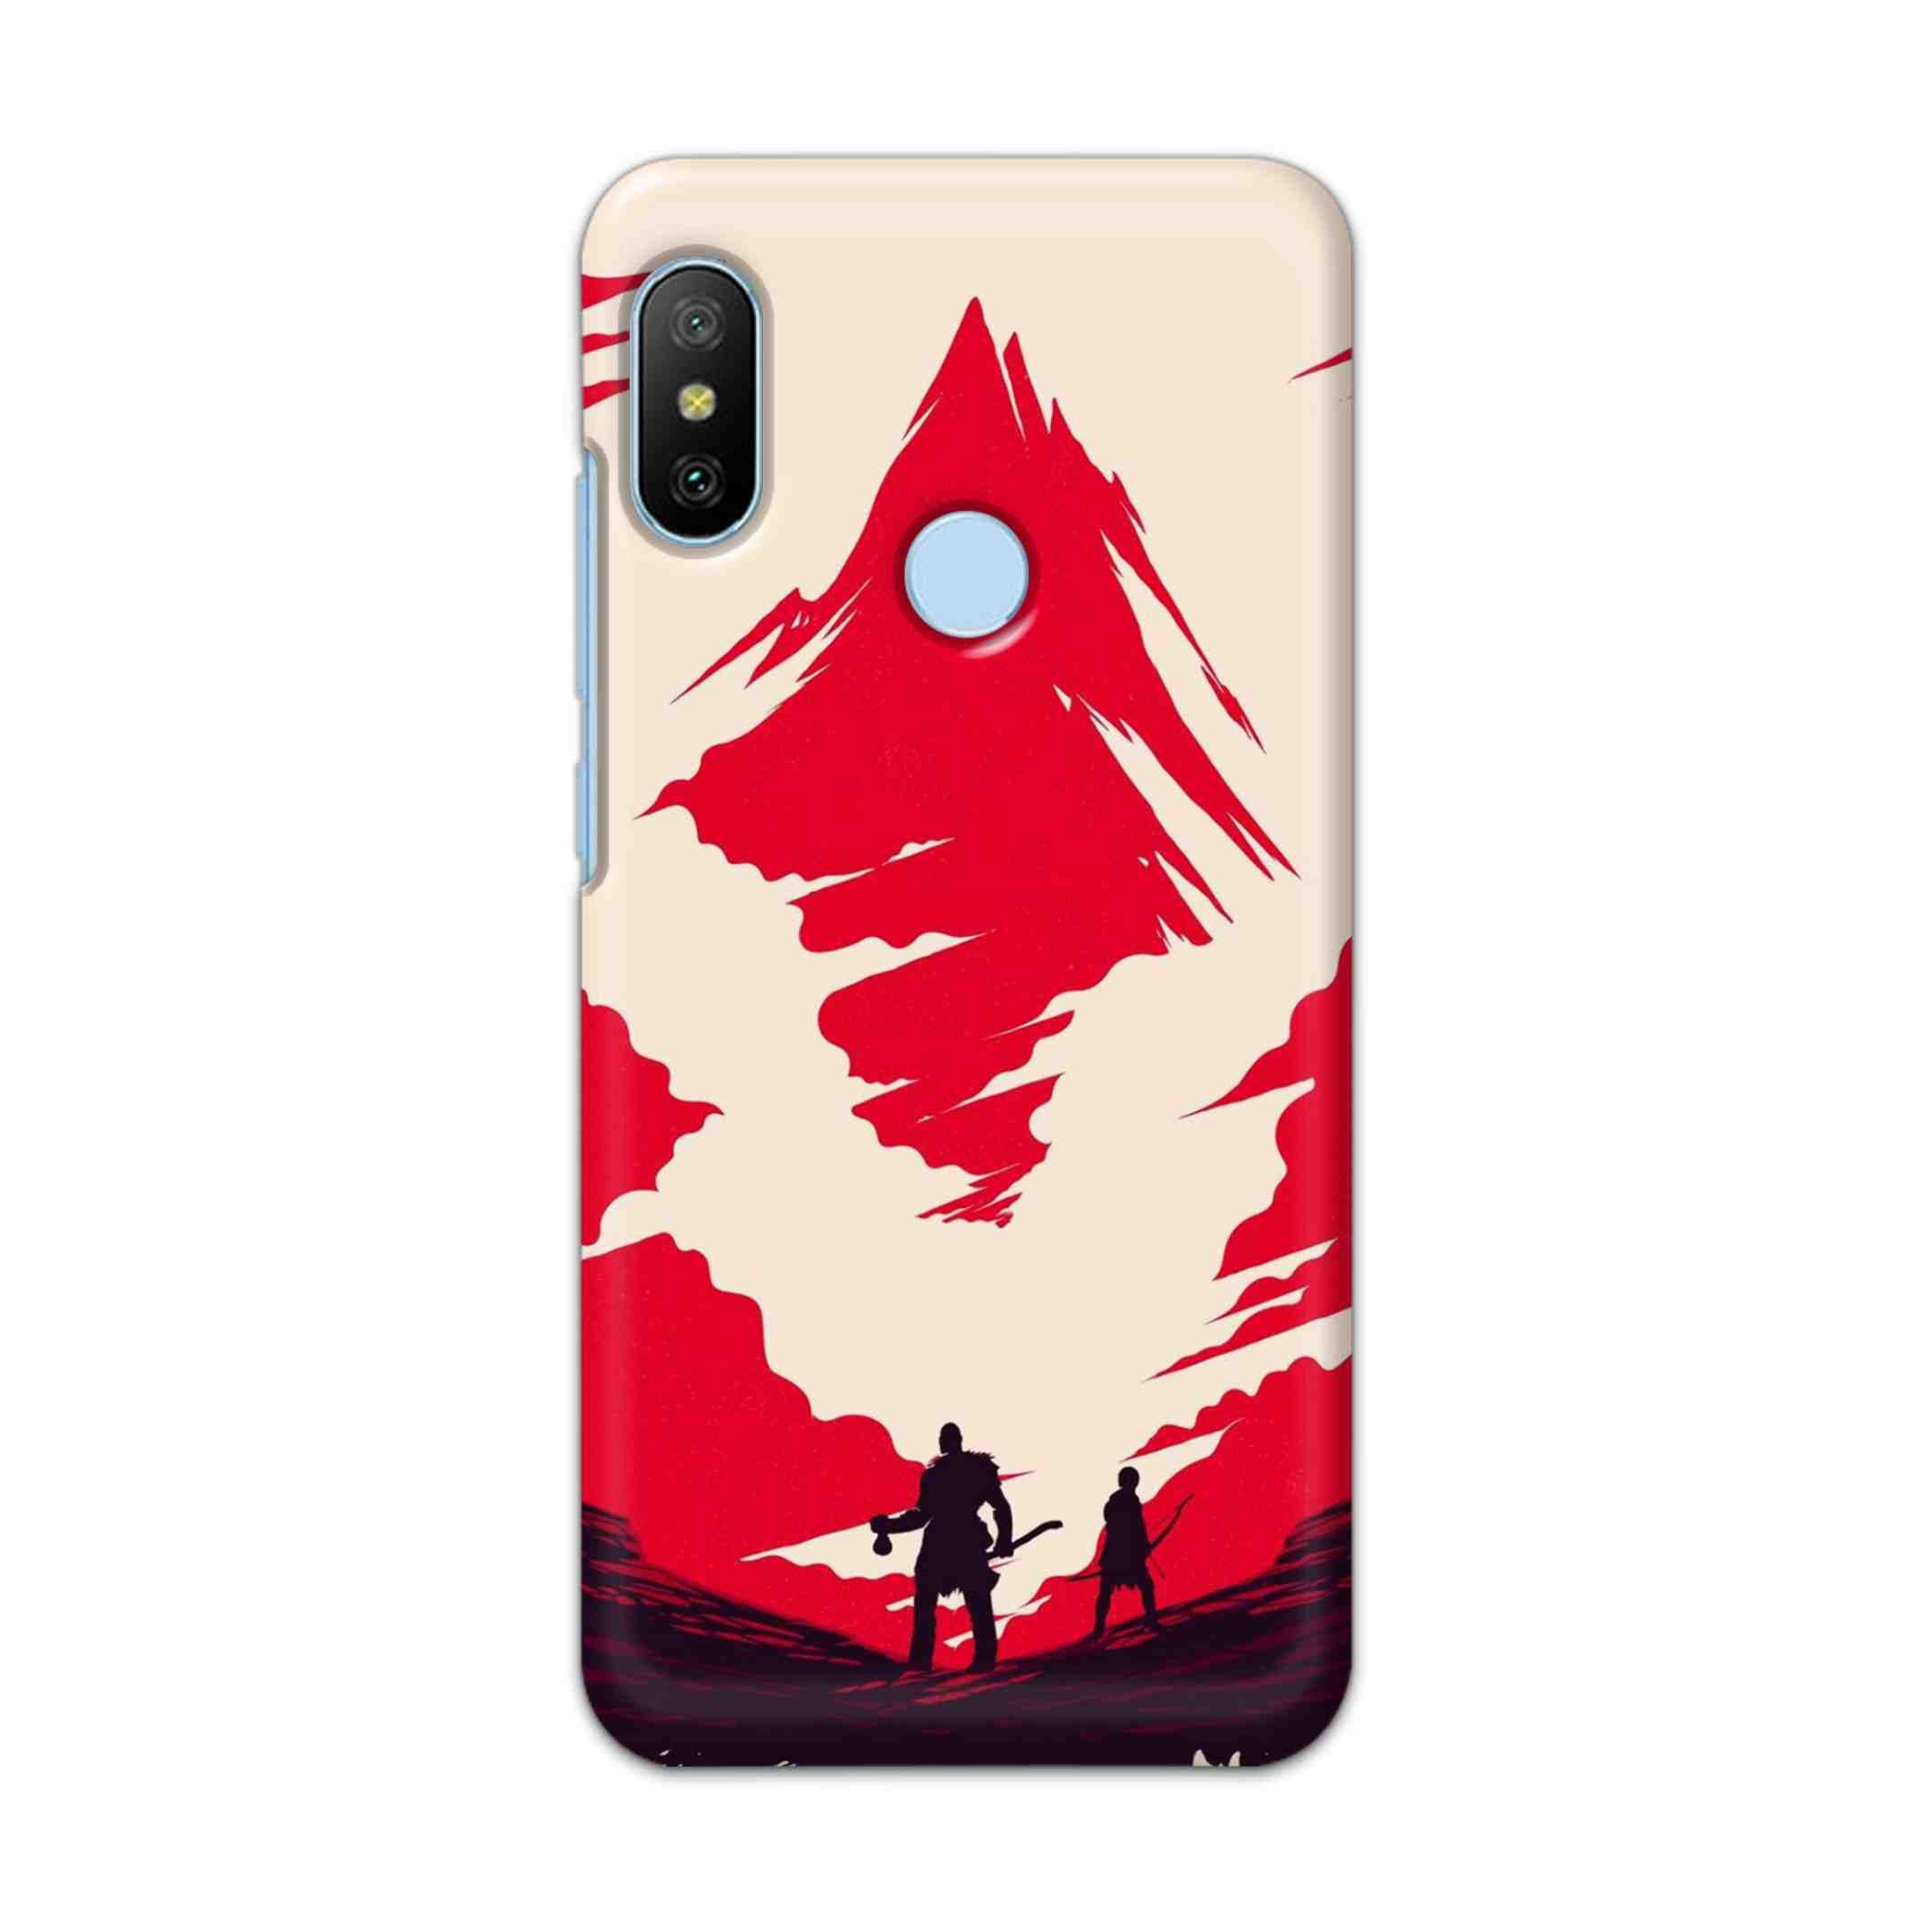 Buy God Of War Art Hard Back Mobile Phone Case/Cover For Xiaomi Redmi 6 Pro Online